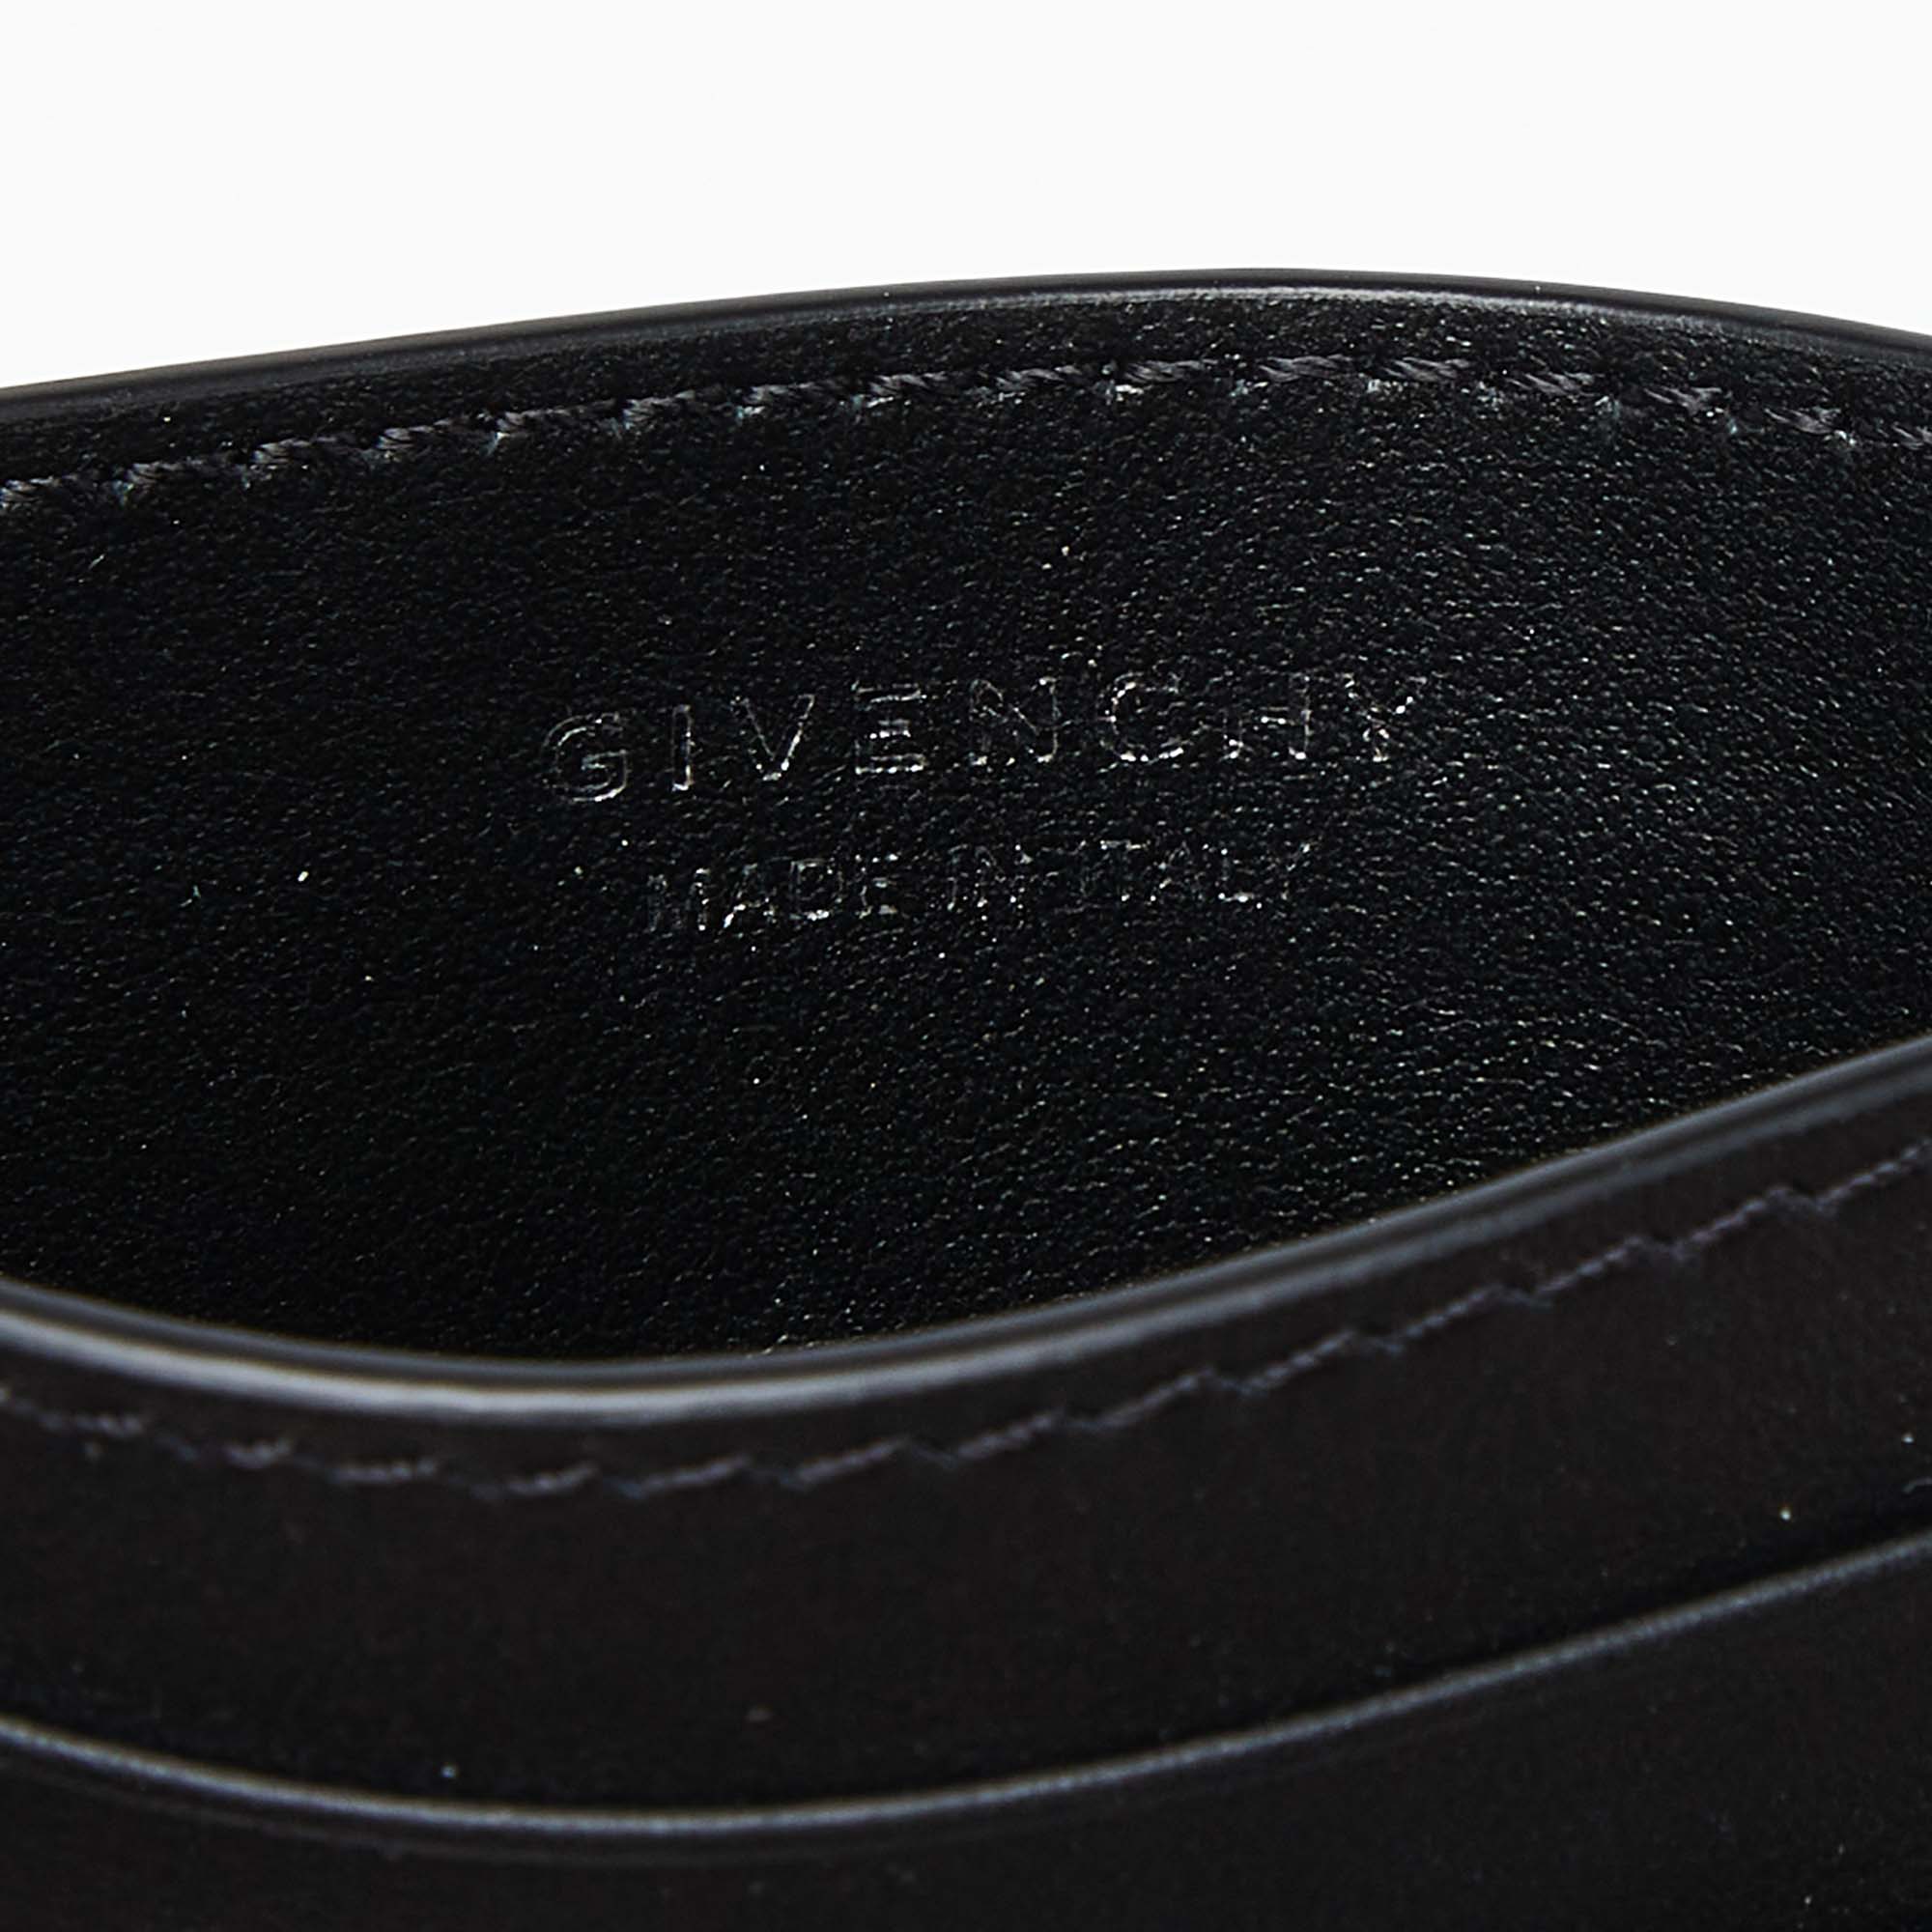 Givenchy Black Leather Logo Card Holder